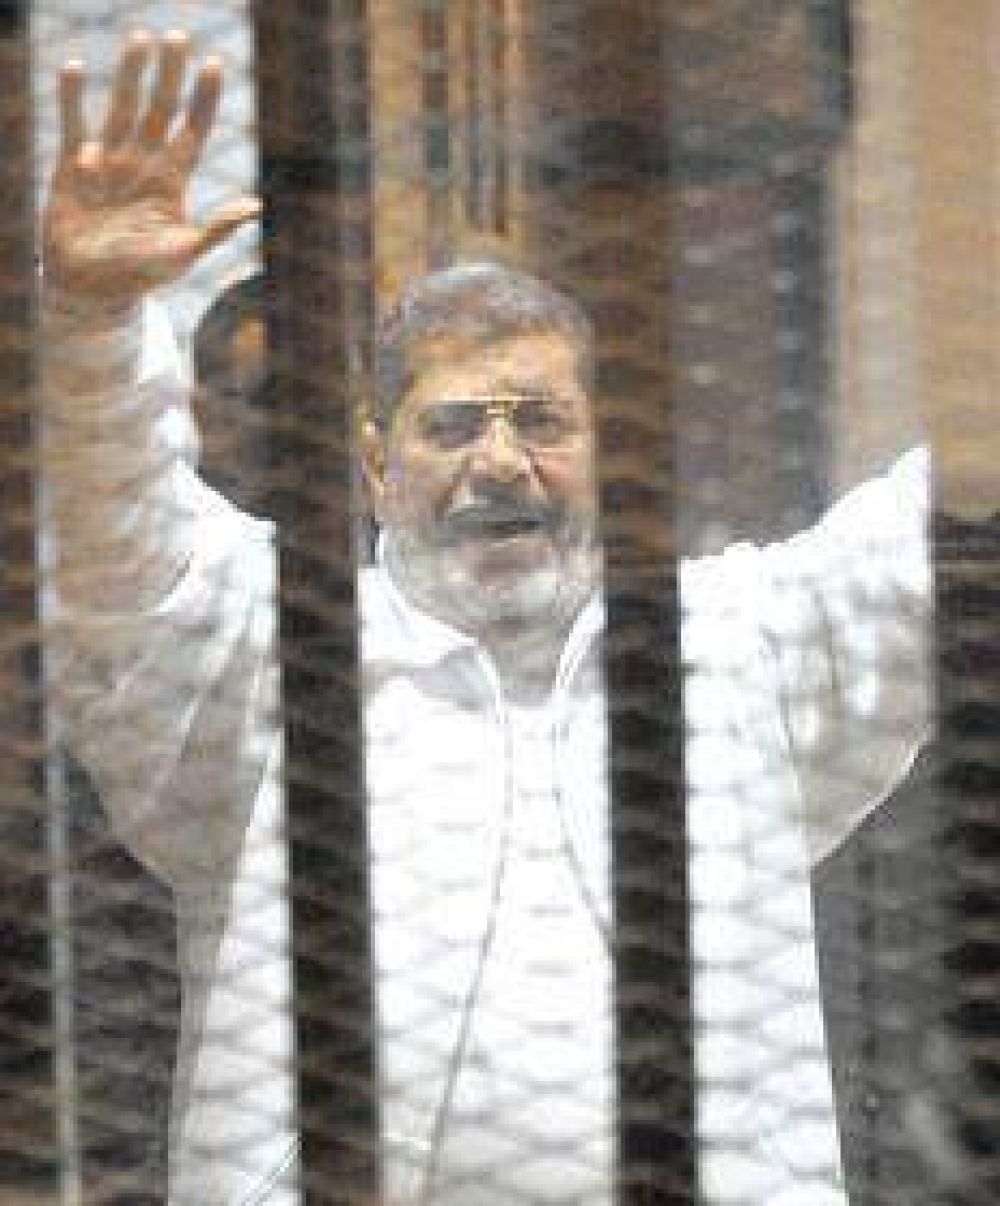 Pena de muerte para Mursi